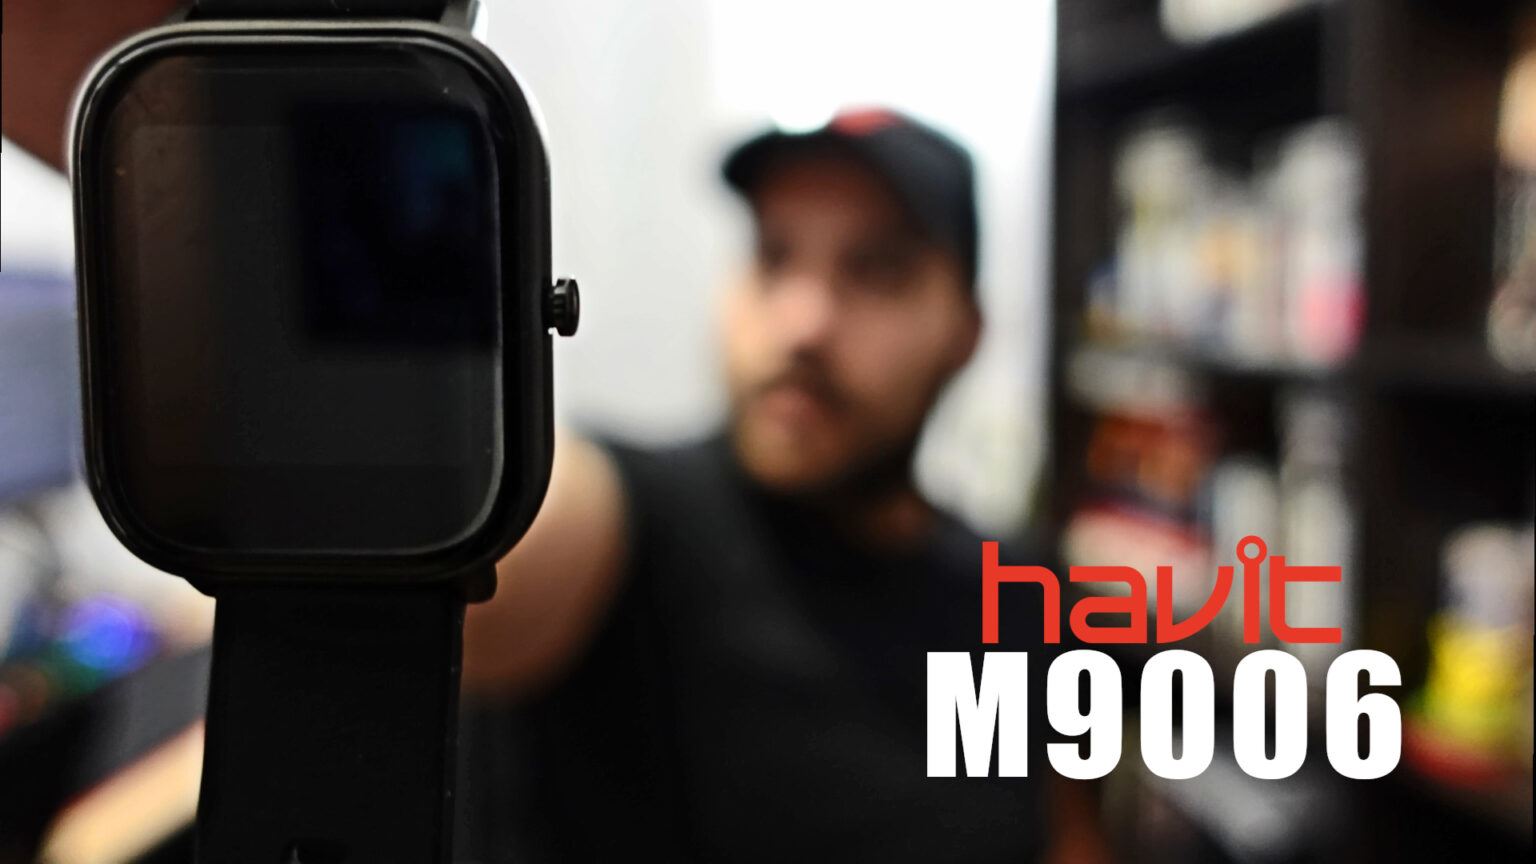 Havit M9006 – Smartwatch Review